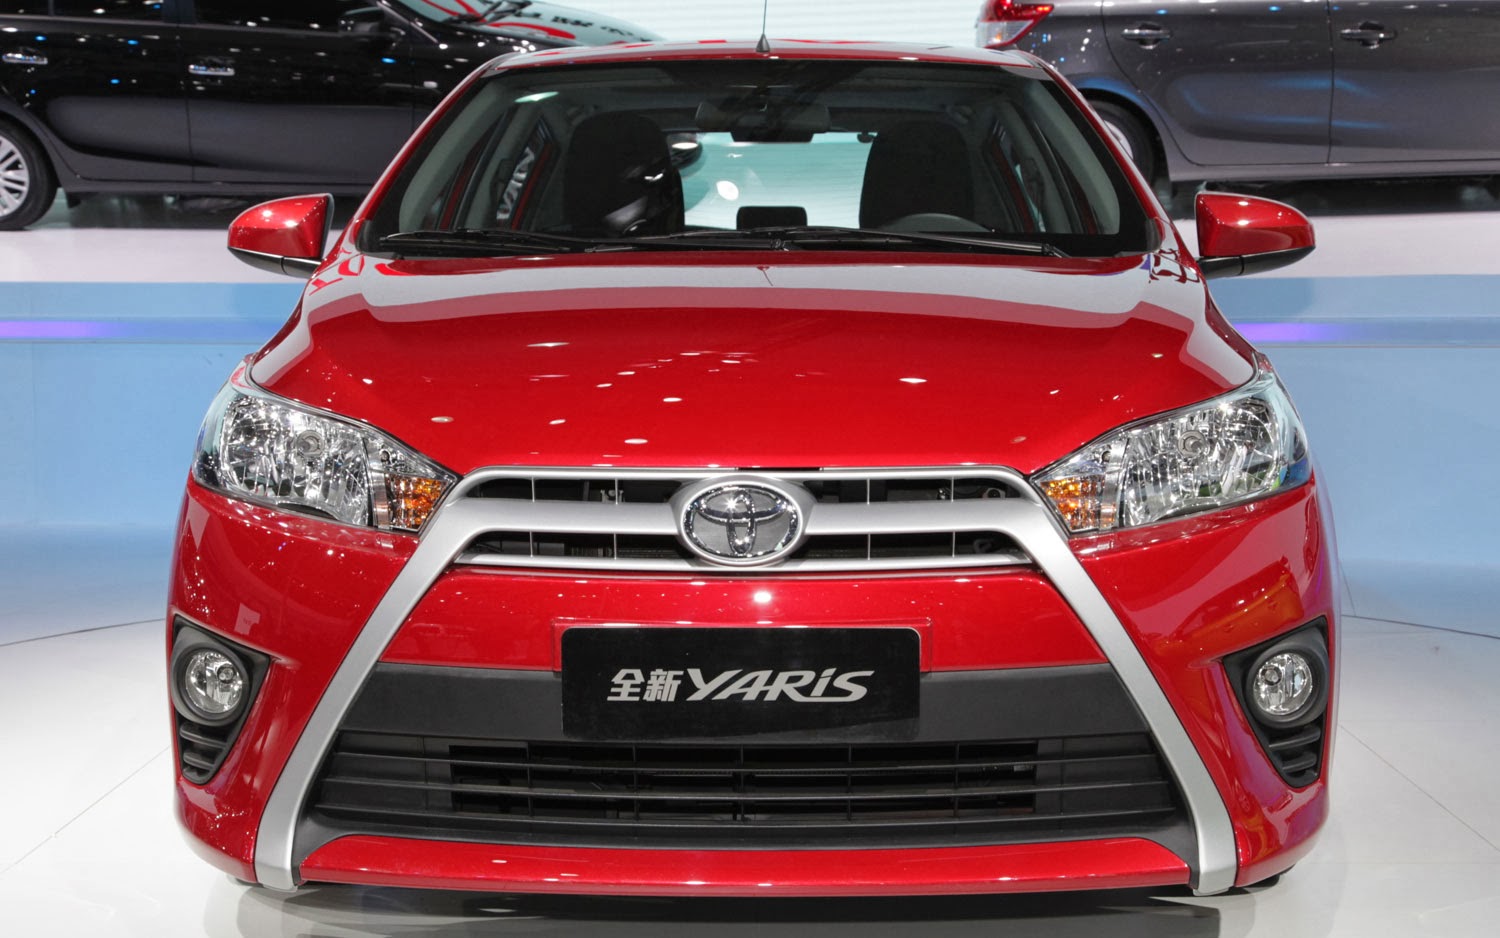 Toyota Yaris 2014 Specs, Interior, Price, Engine.:The list of cars